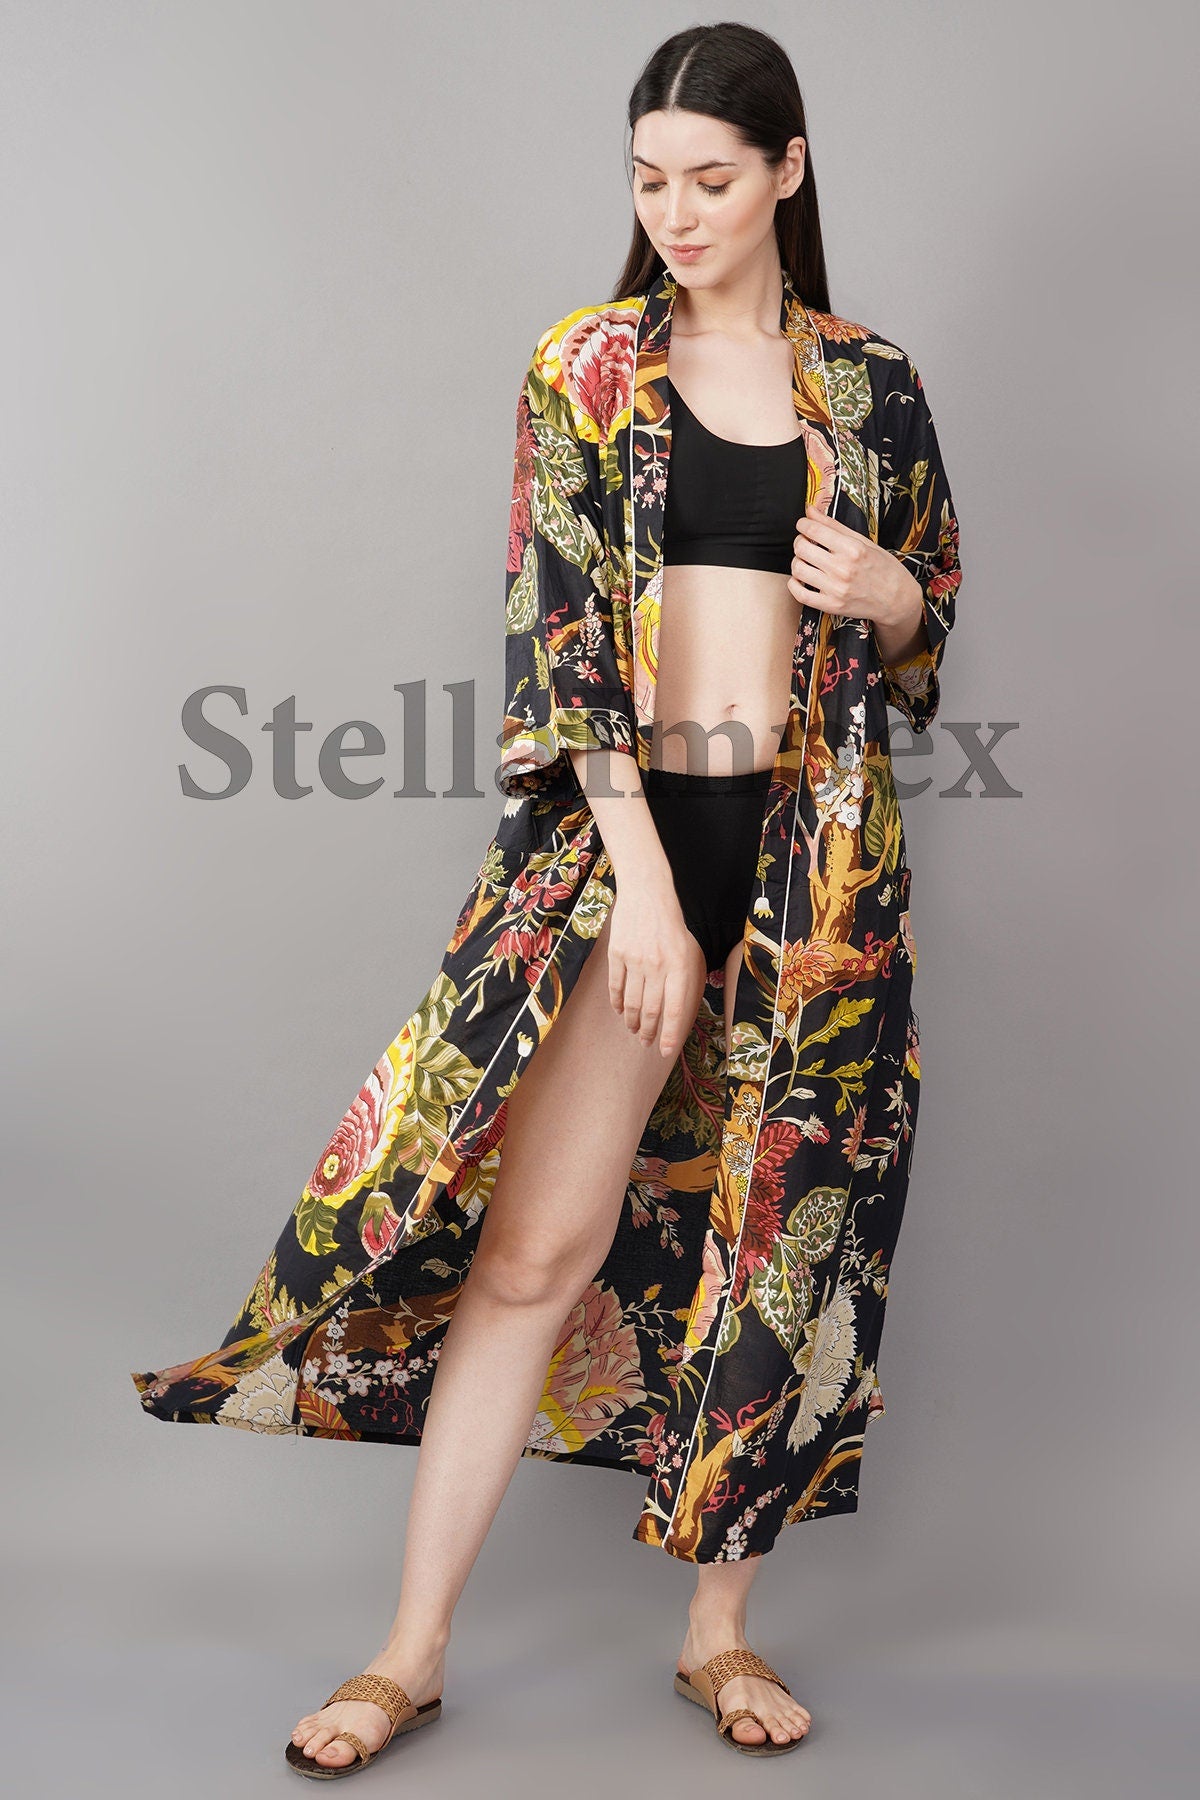 Trendy Cotton Kimono Elegant Black Floral Bathrobe Resort Wear Beach Bikini Cover-ups Boho Kimono Bathrobe, Gift for Her